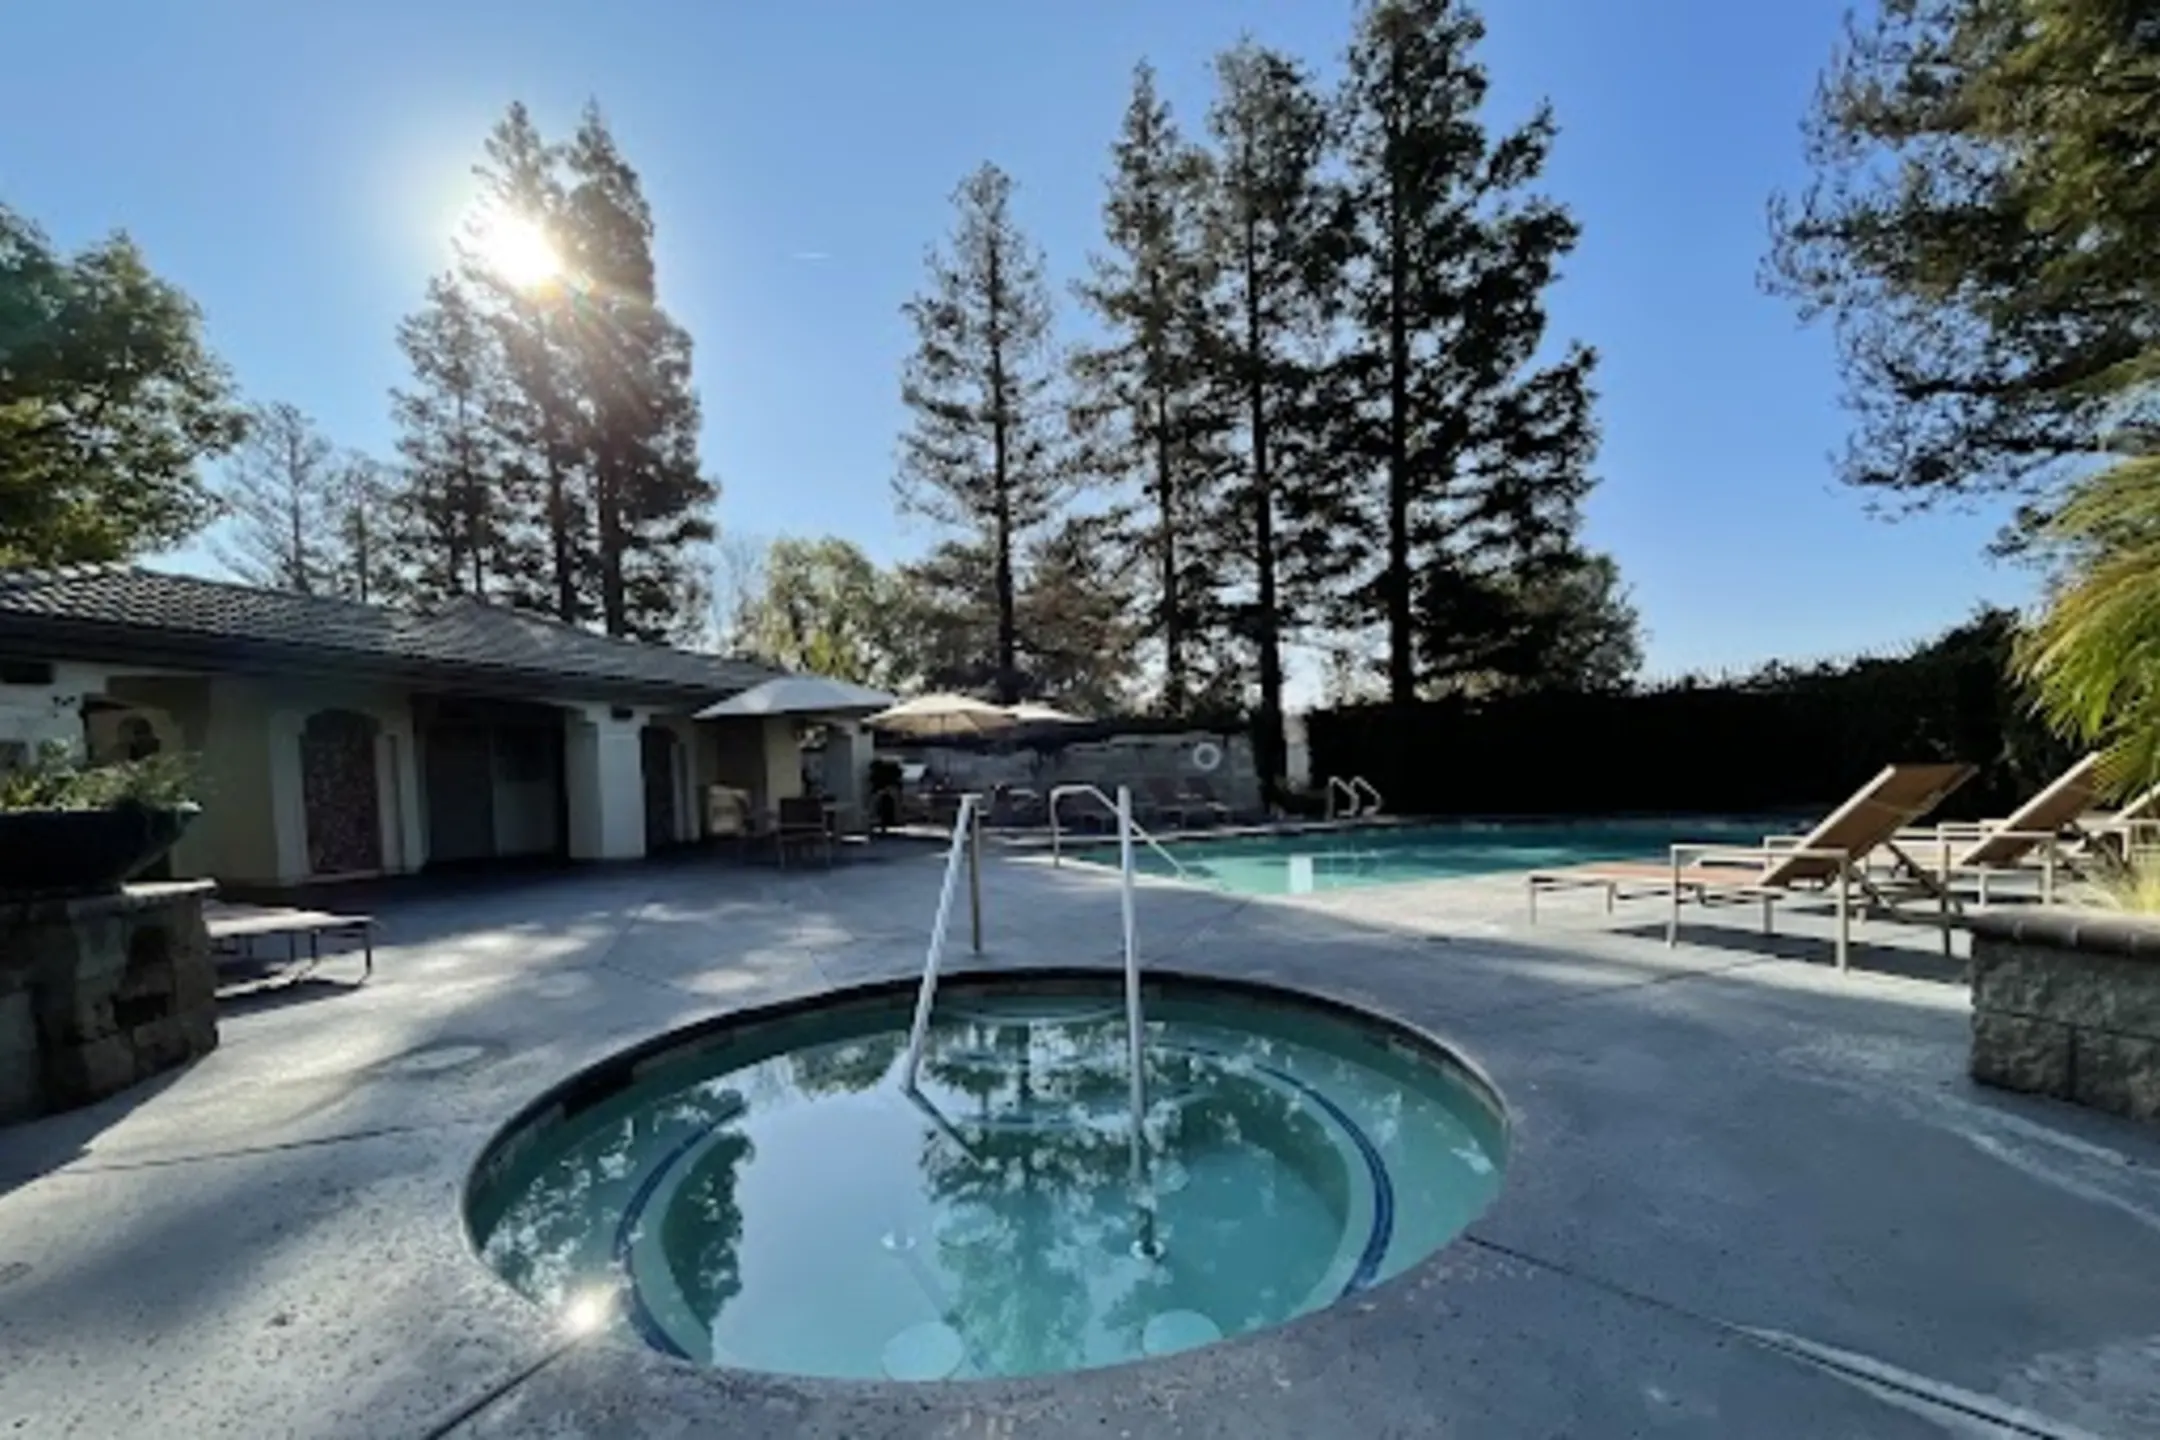 Pool - Villa Mondavi - Bakersfield, CA